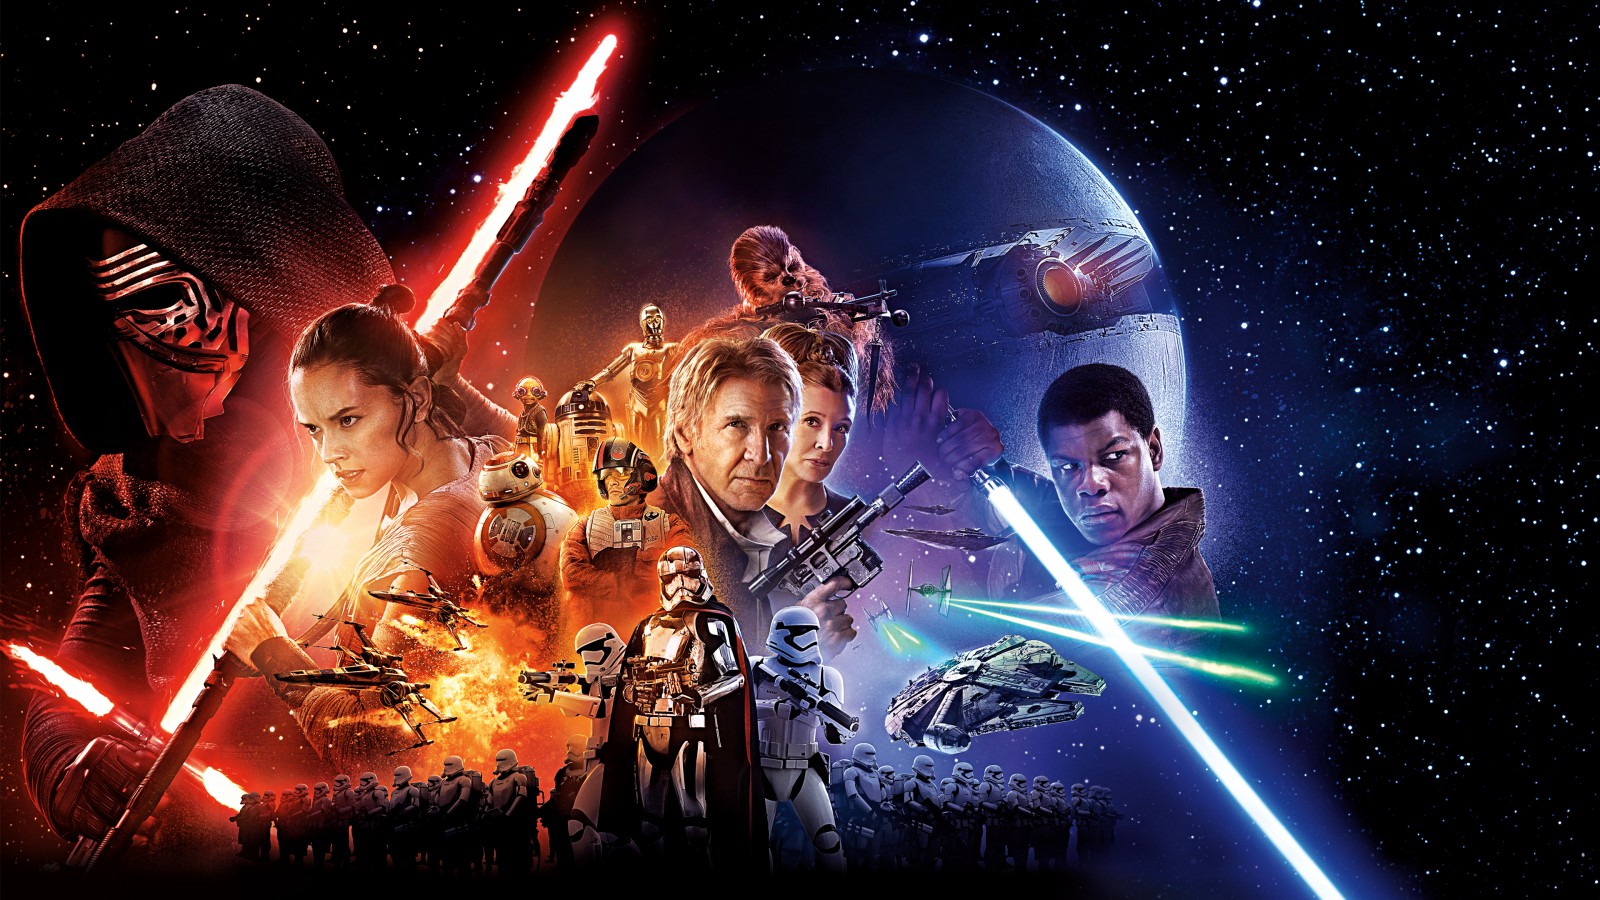 Star wars the force awakens free